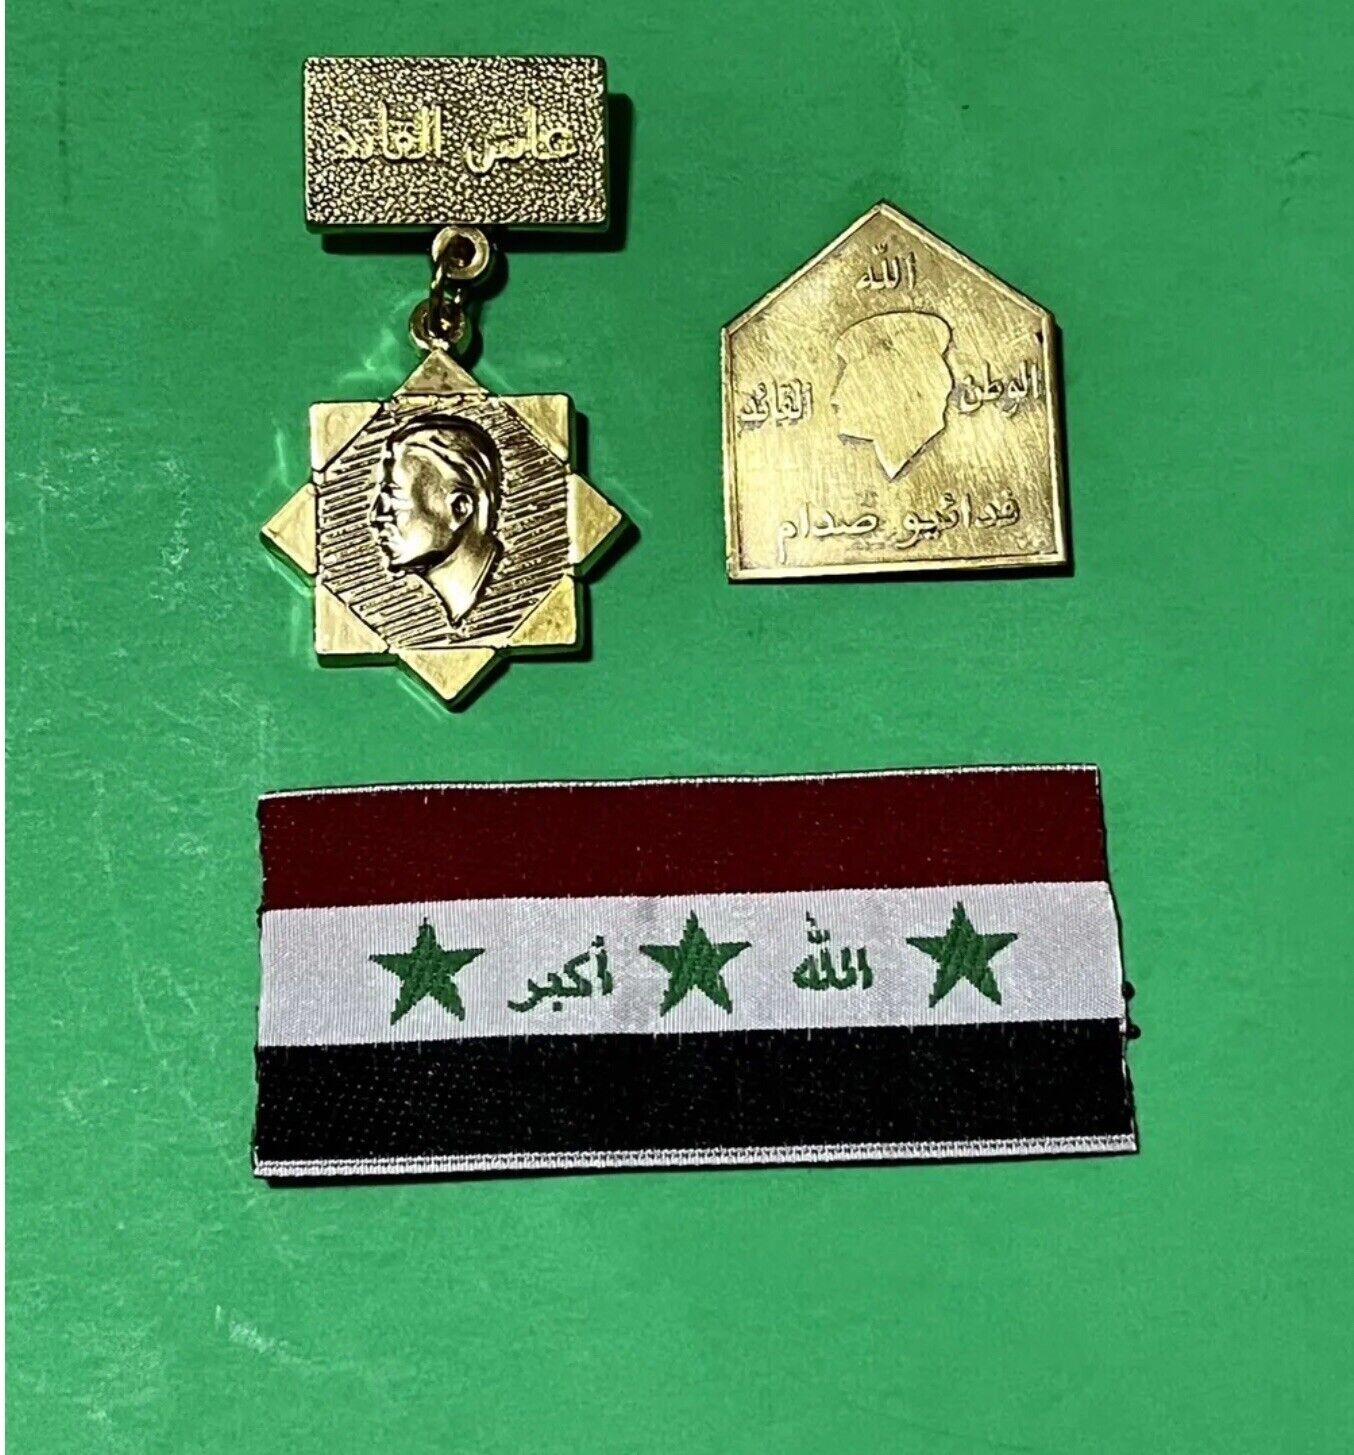 Iraq-operation Iraqi Freedom Fedayeen Saddam Medal, Pin & Flag.